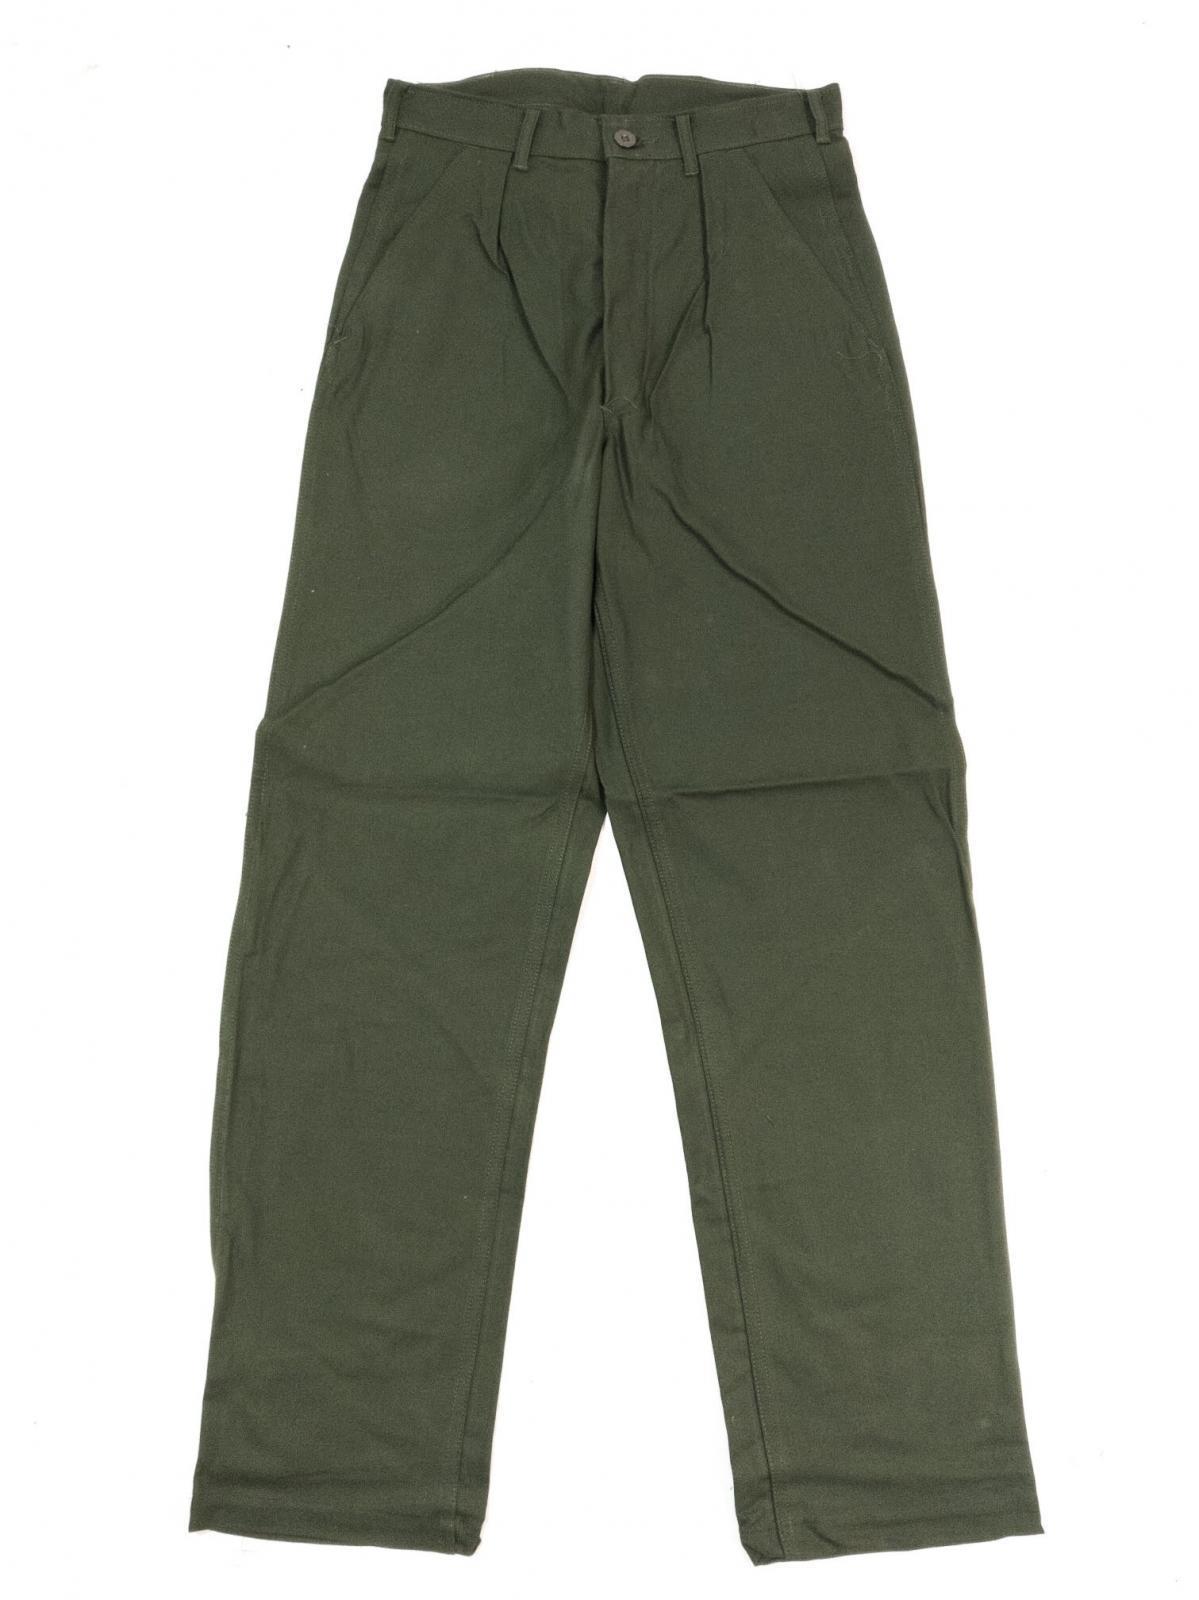 Genuine Swedish Army Surplus Olive Green Trousers - Surplus & Lost